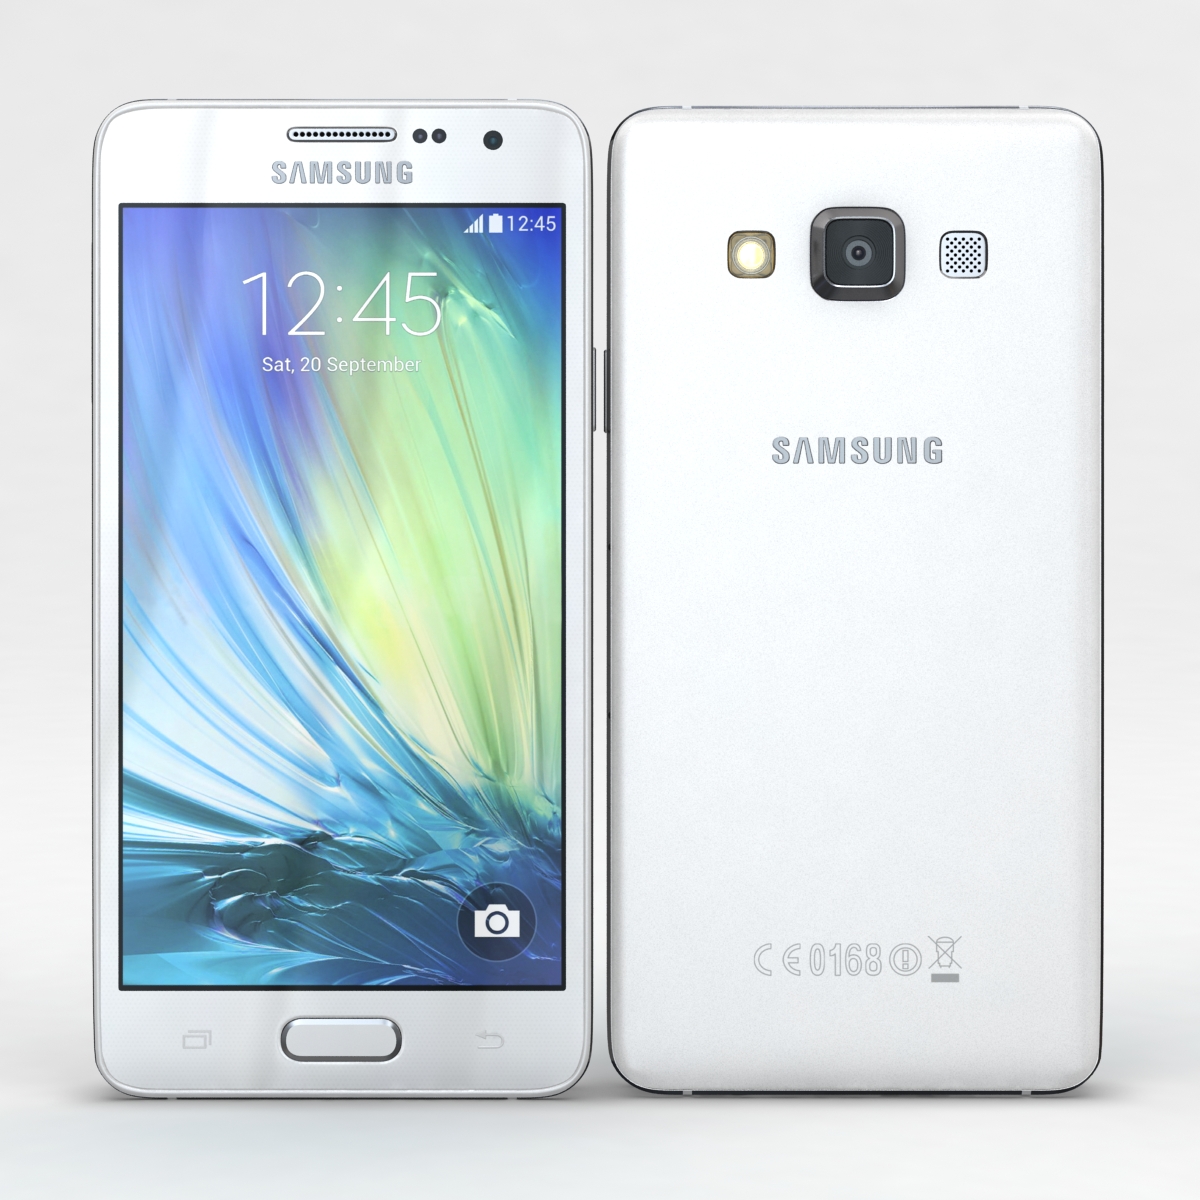 Pence Cilios Habitar Samsung Galaxy A3 Duos White 16GB 1GB RAM Qualcomm MSM8916 Snapdragon 410  Gsm Unlocked Phone DISPLAY 4.5-Inches PROCESSOR Qualcomm MSM8916 Snapdragon  410 FRONT CAMERA 5MP REAR CAMERA 8MP RAM 1GB STORAGE 16GB